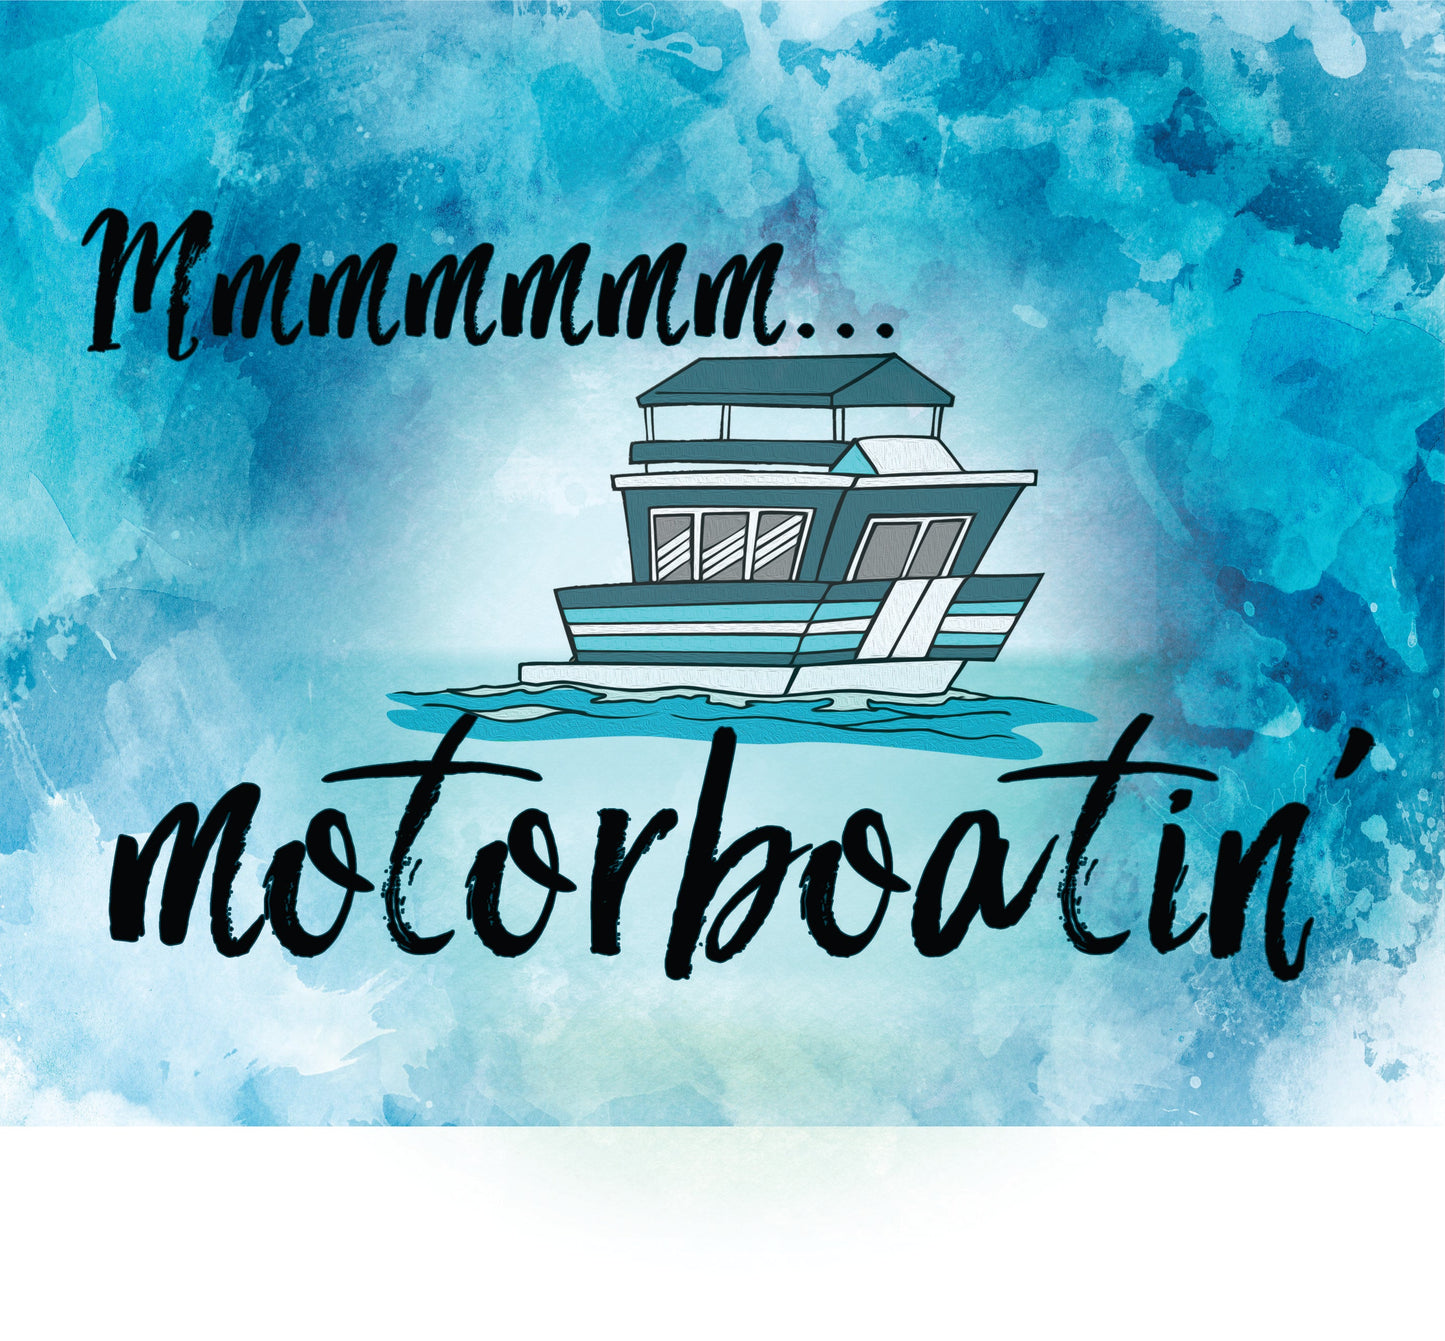 Mmm Motorboatin' Sign